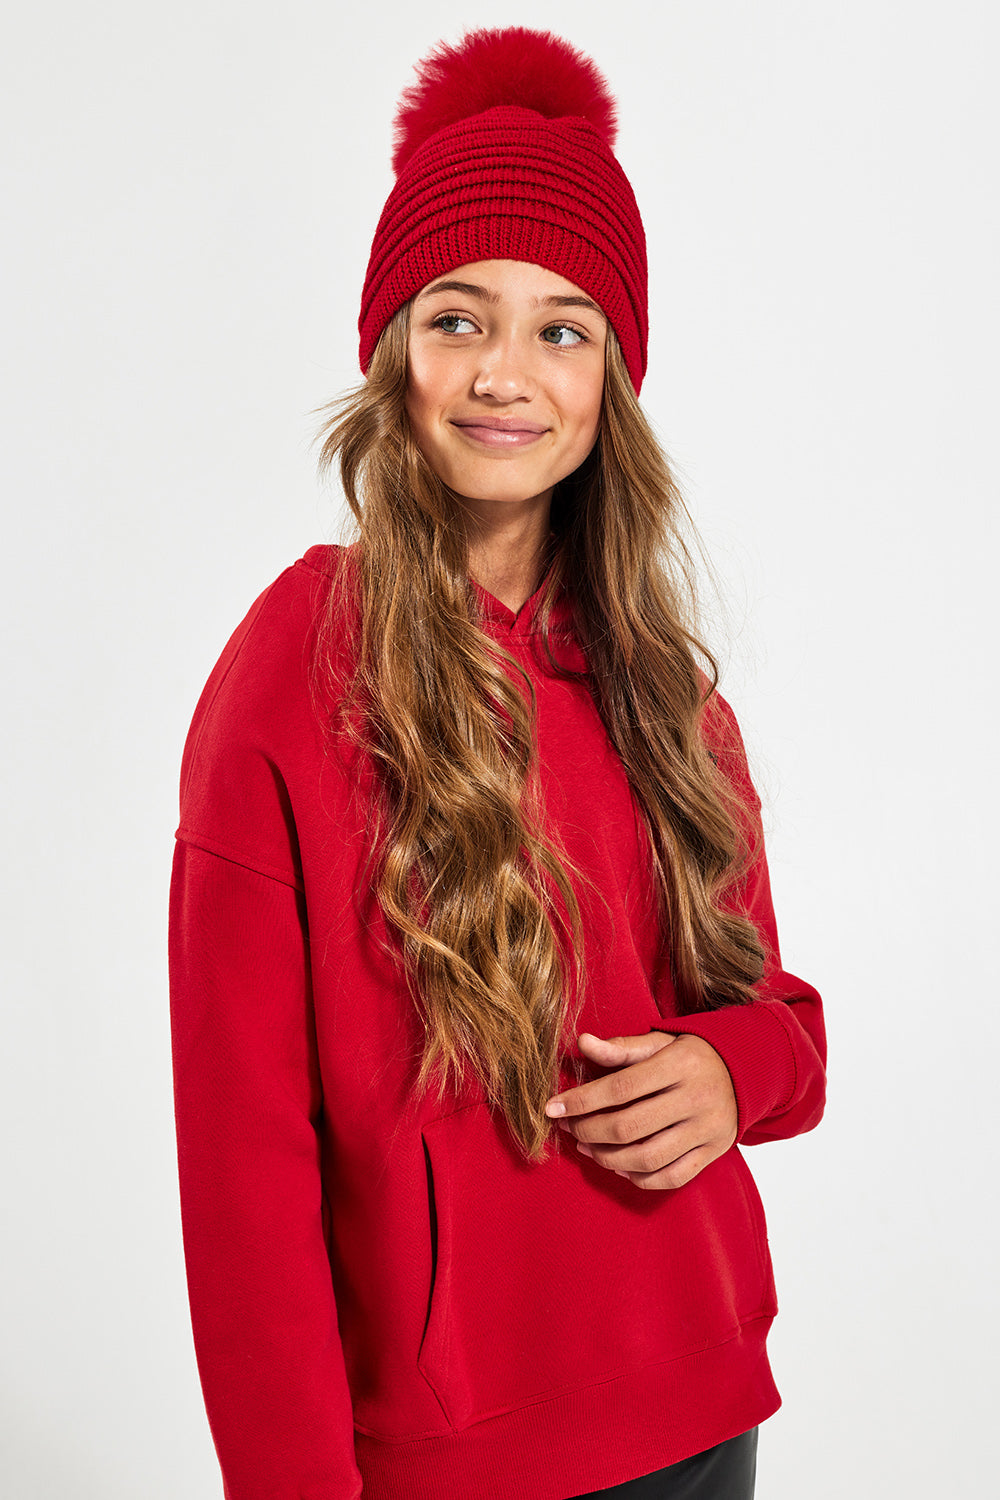 Cashmere in Love Kids knit beanie hat - Red